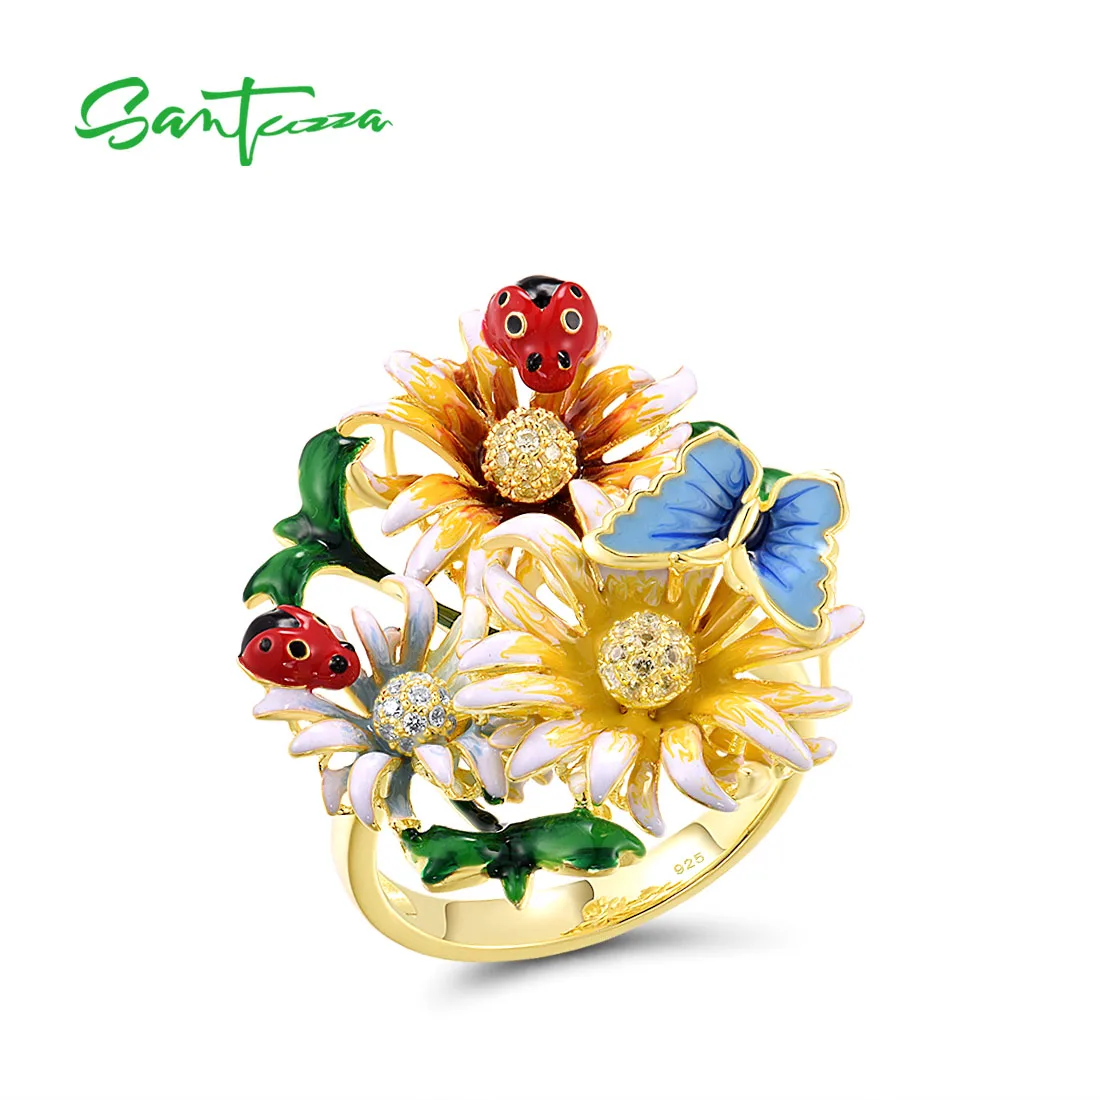 SANTUZZA 925 Sterling Silver Rings For Women Champagne Yellow White CZ Enamel Flower Butterfly Ladybug Fine Jewelry Handmade